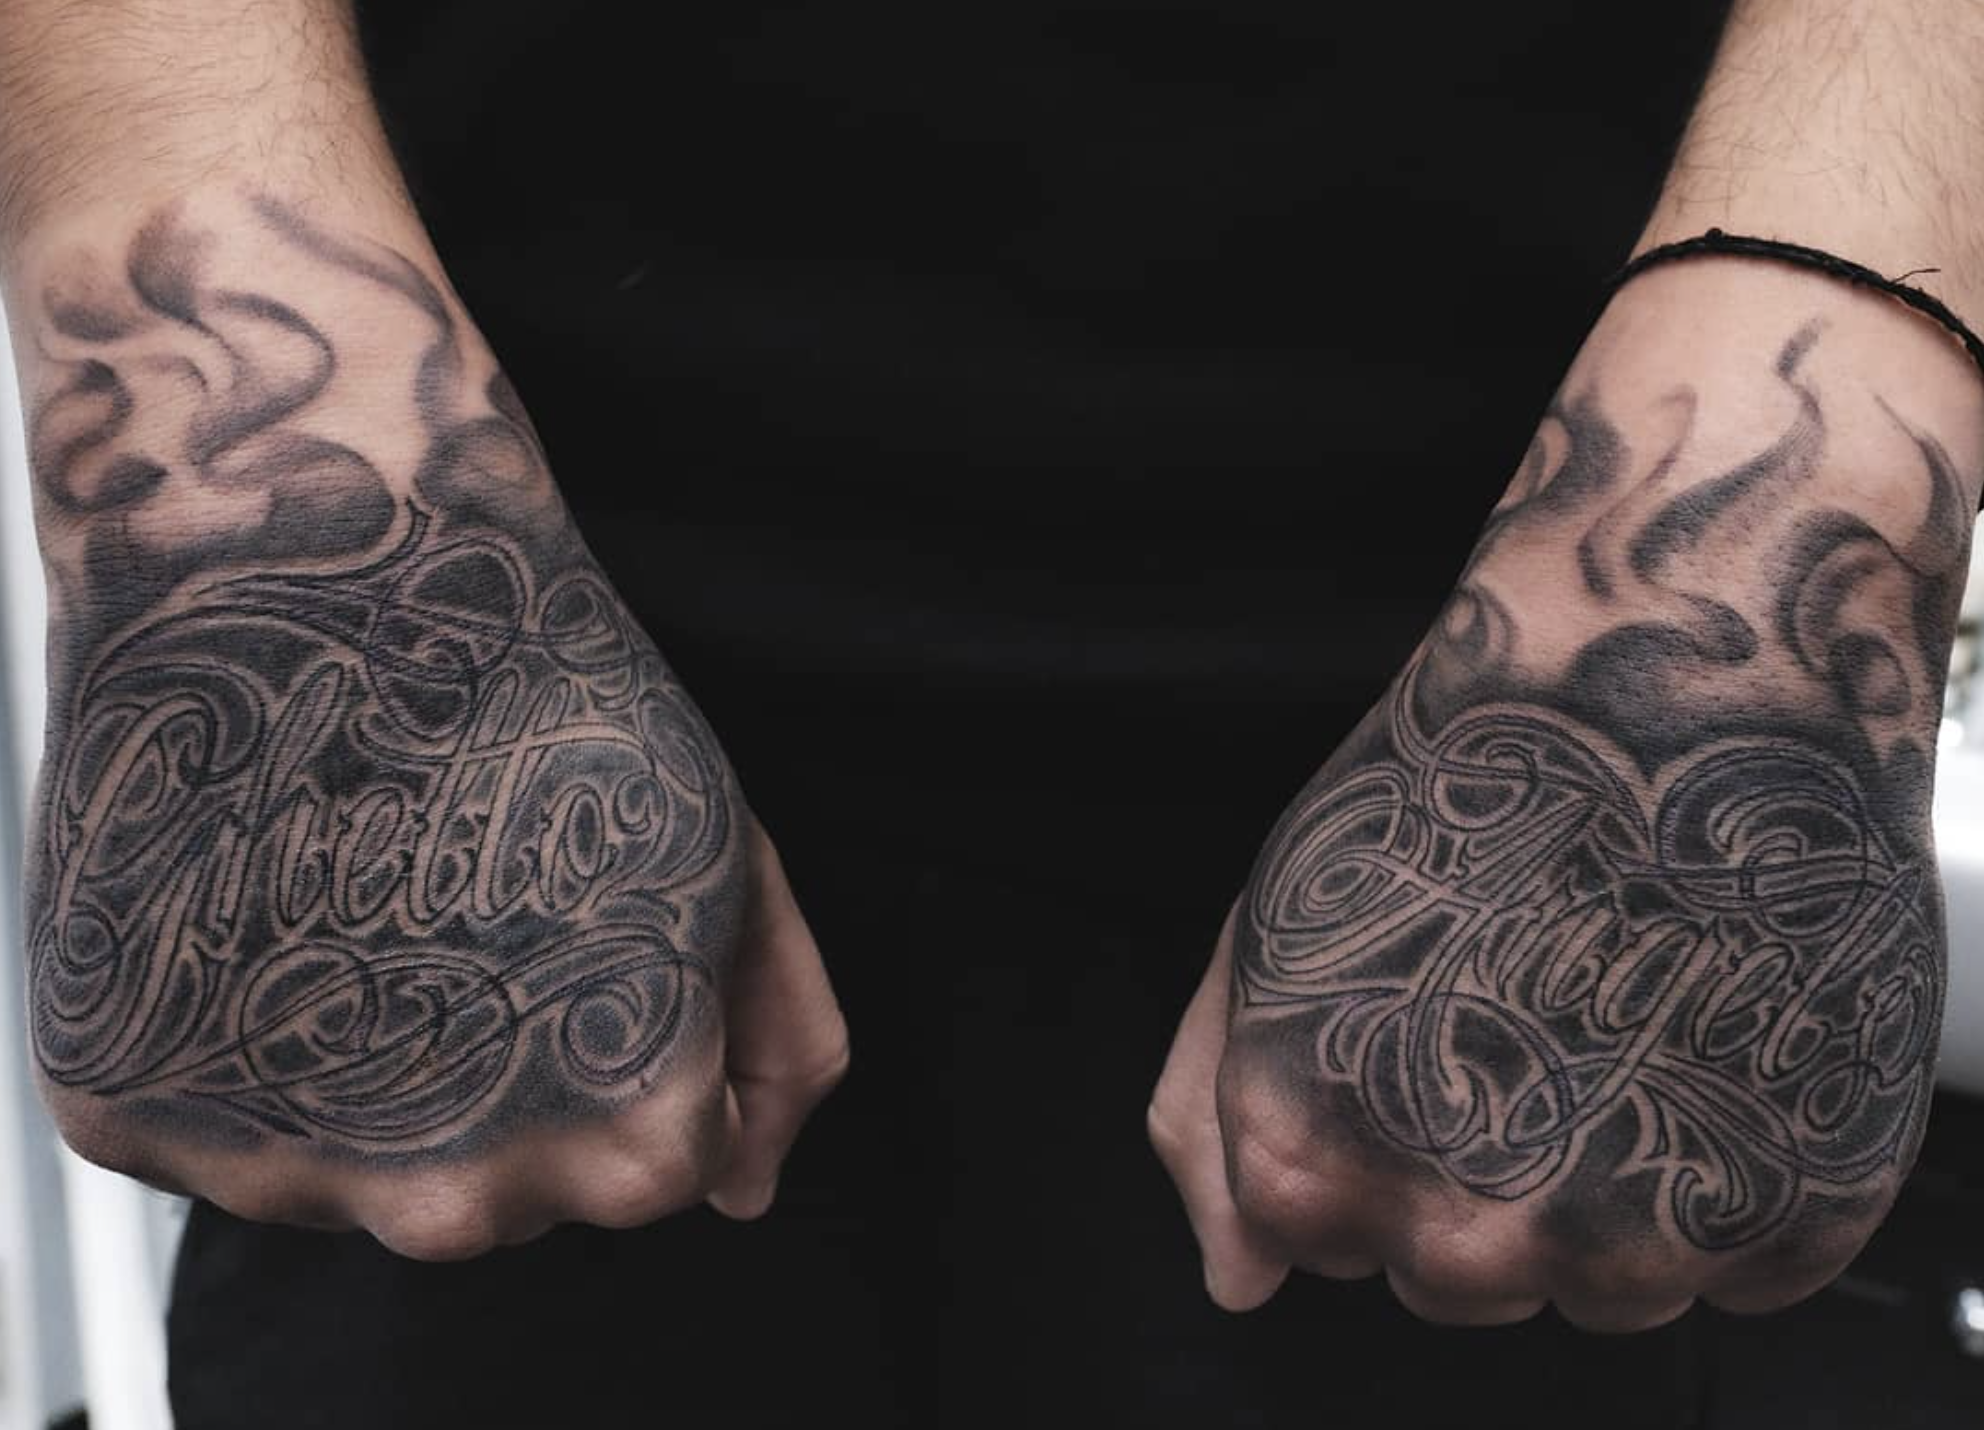 905 INK Tattoo hands